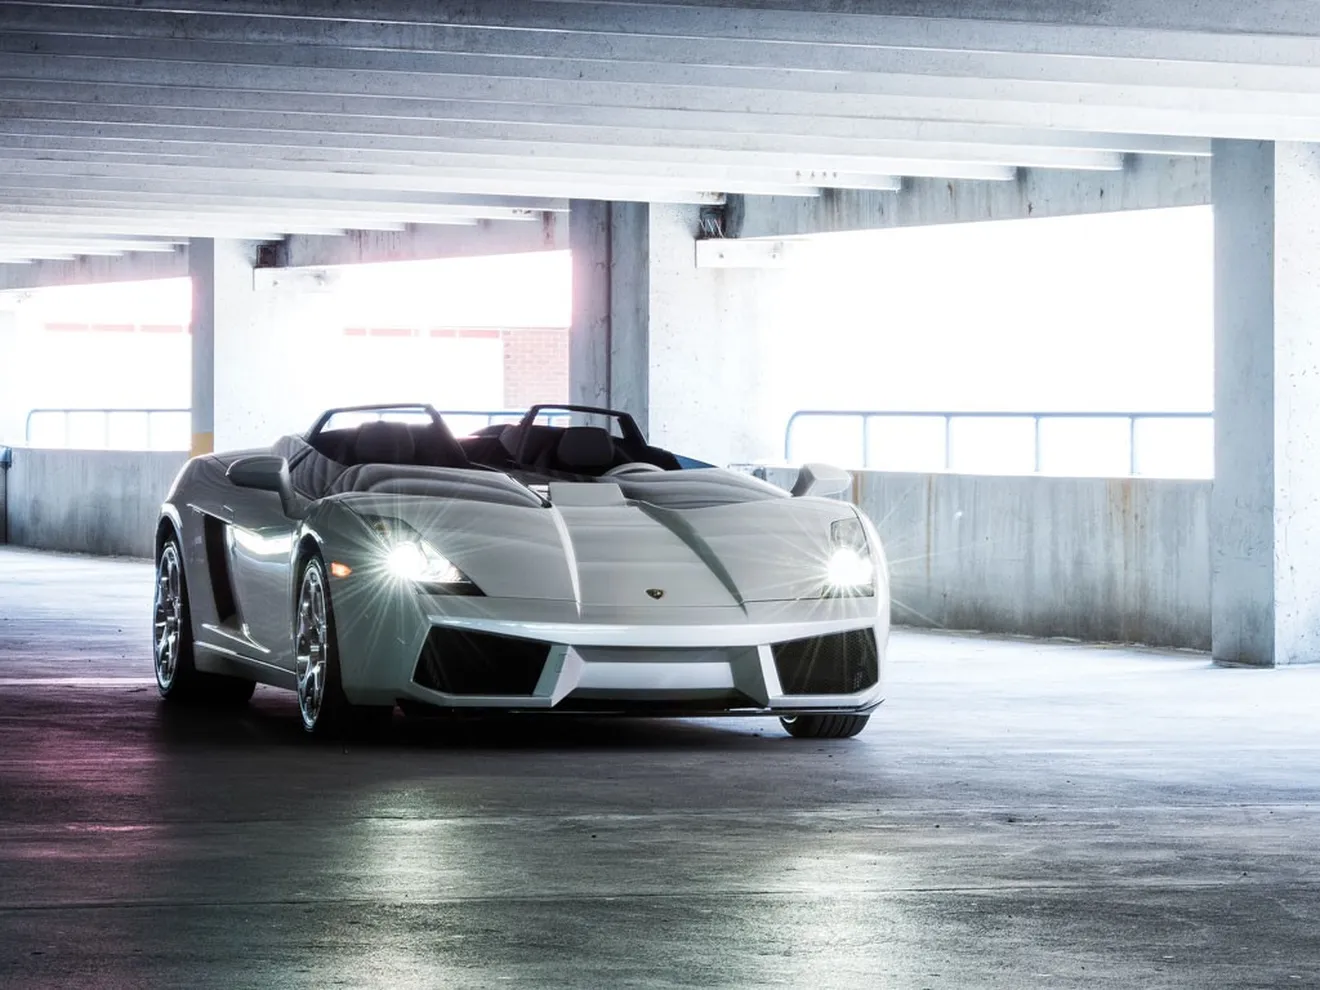 Sale a subasta el único Lamborghini Gallardo Concept S del mundo